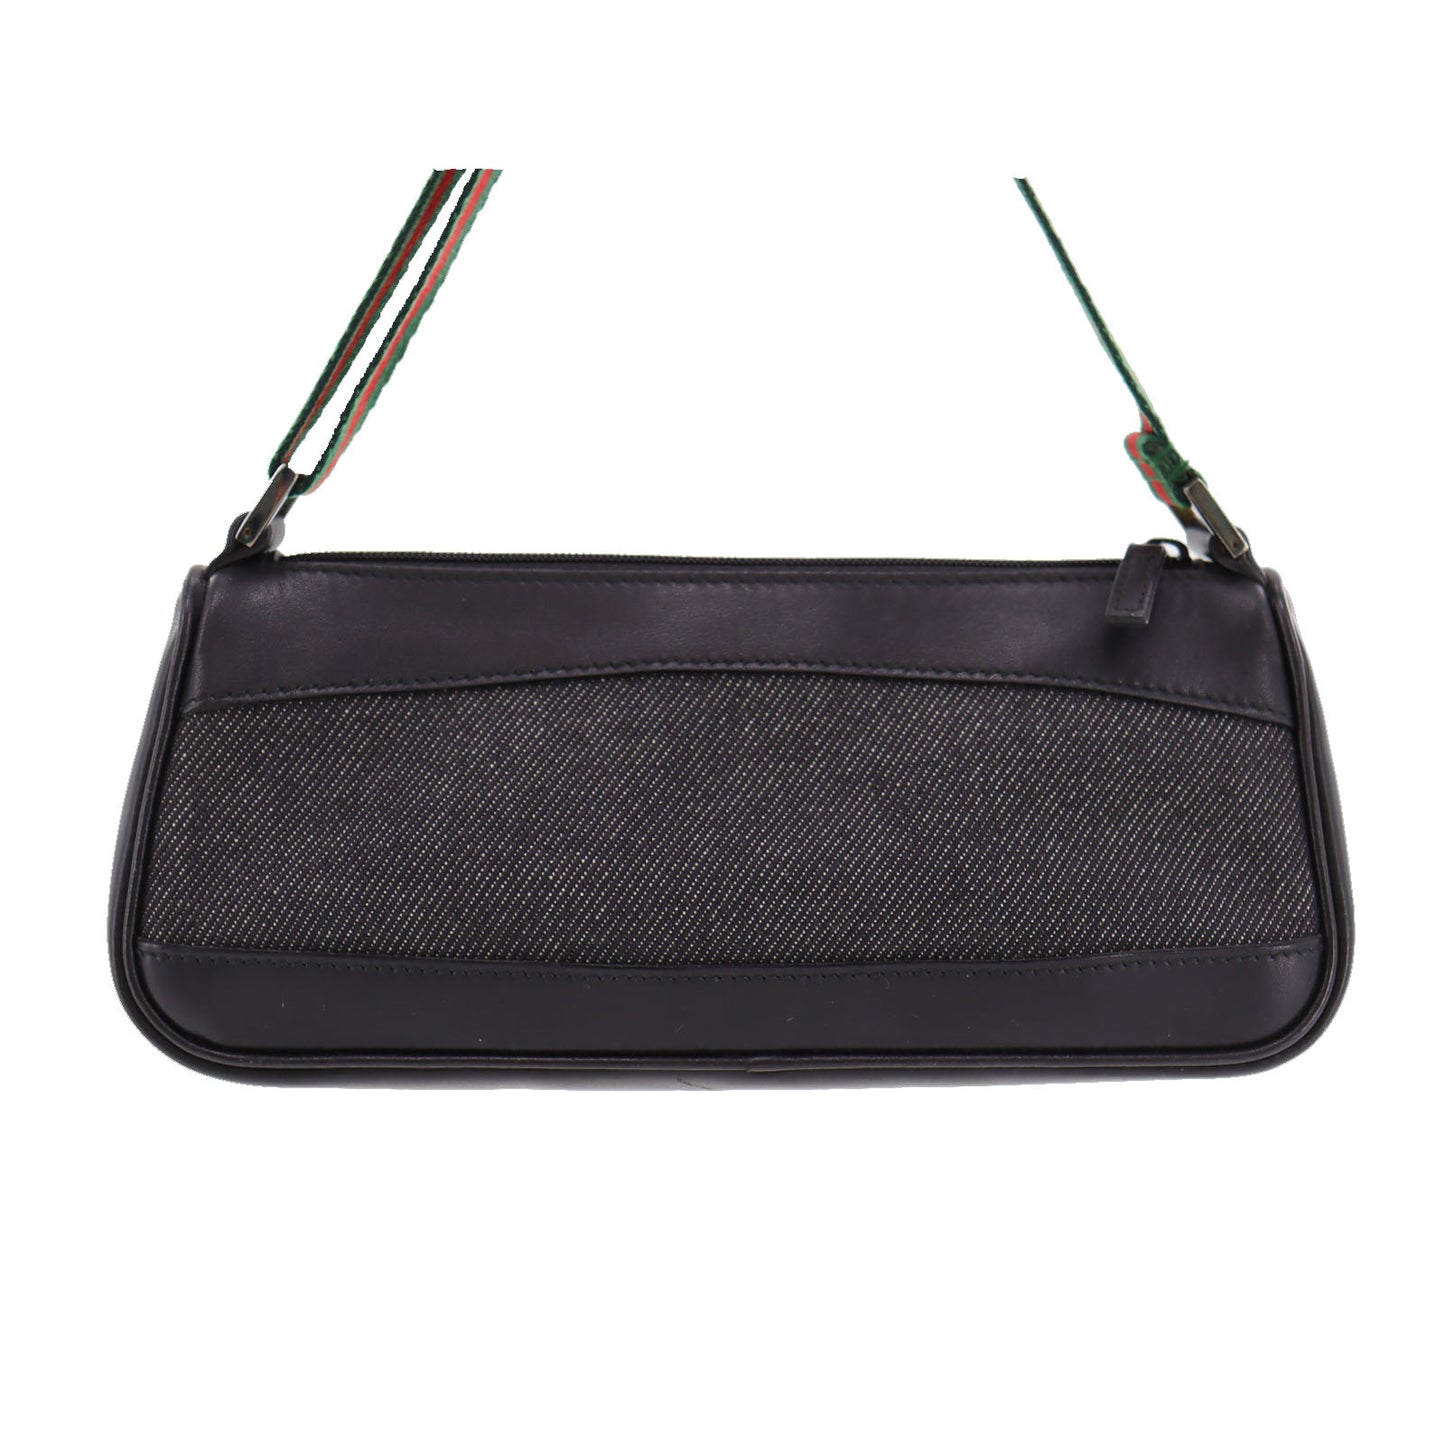 GUCCI Logos Web Stripe Small Handbag Black Canvas Leather #AH366